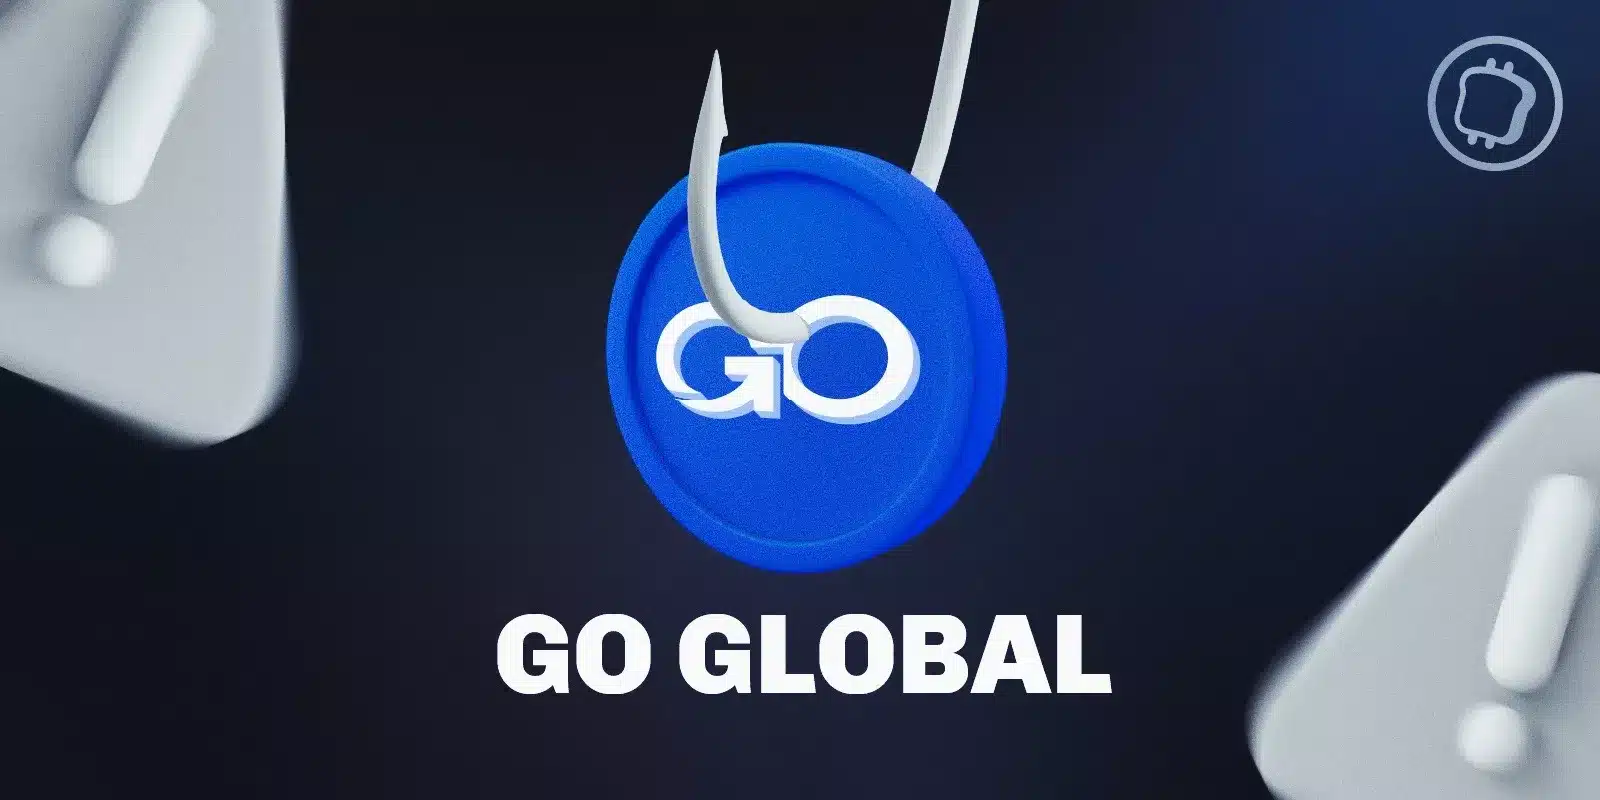 Allez Logo Global Sur Fond Bleu.